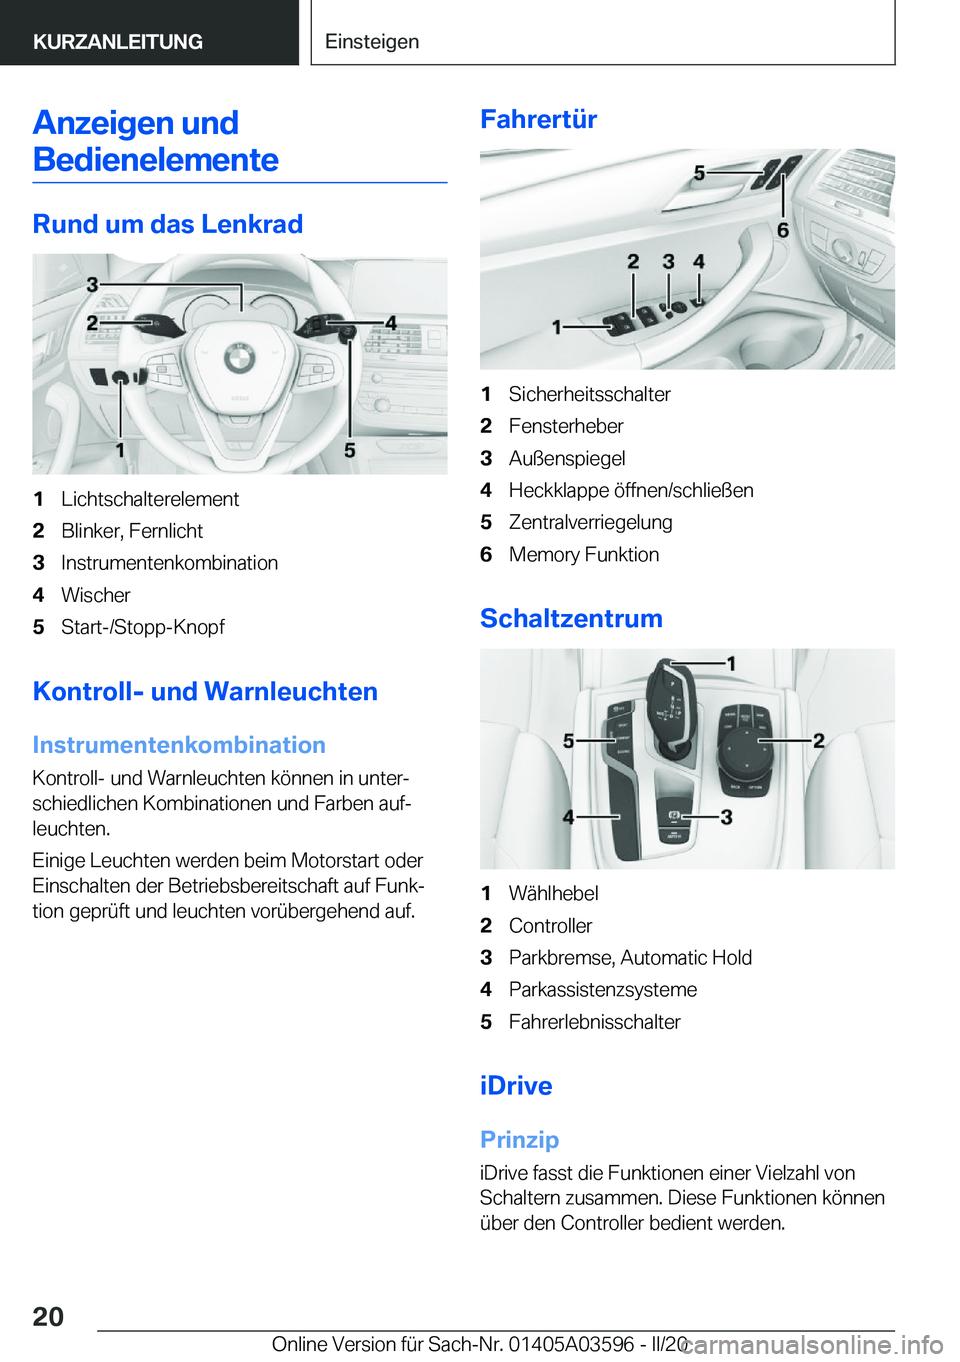 BMW X4 2020  Betriebsanleitungen (in German) �A�n�z�e�i�g�e�n��u�n�d�B�e�d�i�e�n�e�l�e�m�e�n�t�e
�R�u�n�d��u�m��d�a�s��L�e�n�k�r�a�d
�1�L�i�c�h�t�s�c�h�a�l�t�e�r�e�l�e�m�e�n�t�2�B�l�i�n�k�e�r�,��F�e�r�n�l�i�c�h�t�3�I�n�s�t�r�u�m�e�n�t�e�n�k